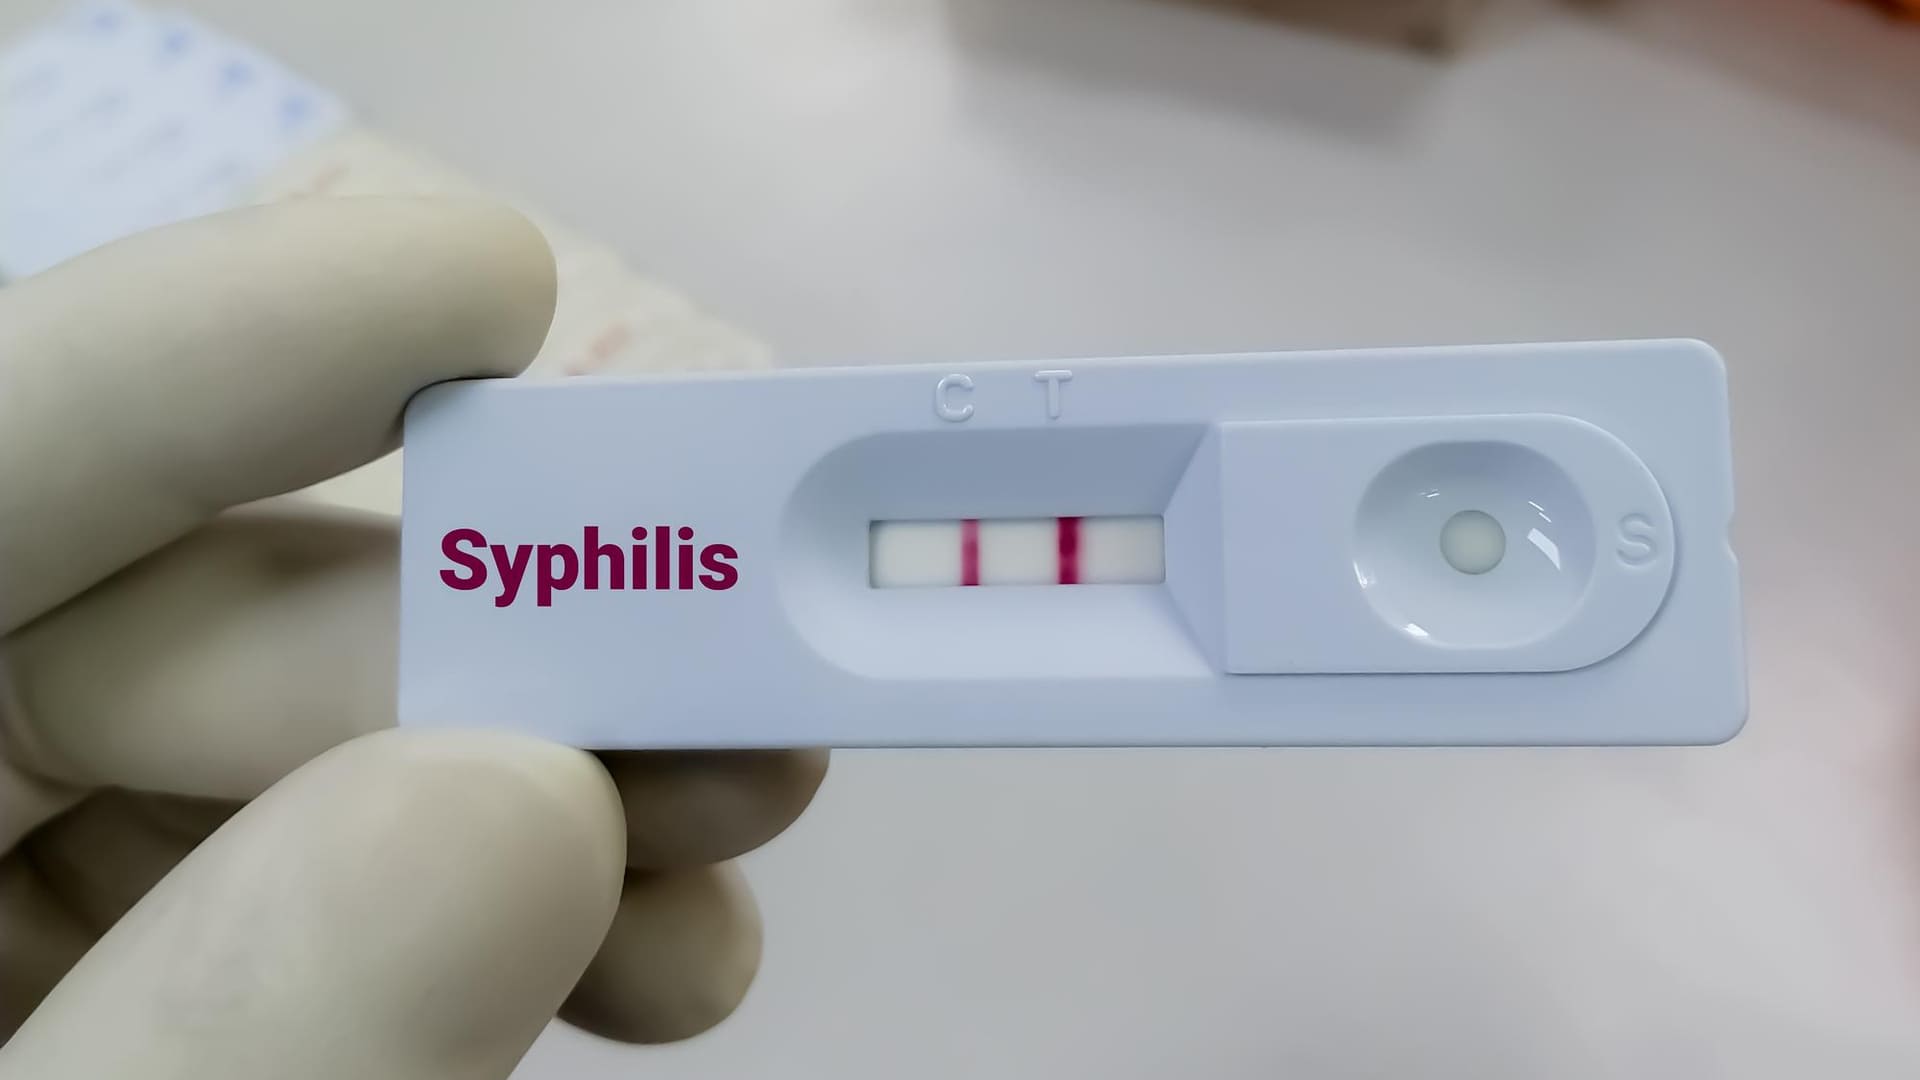 Test per diagnosticare la sifilide